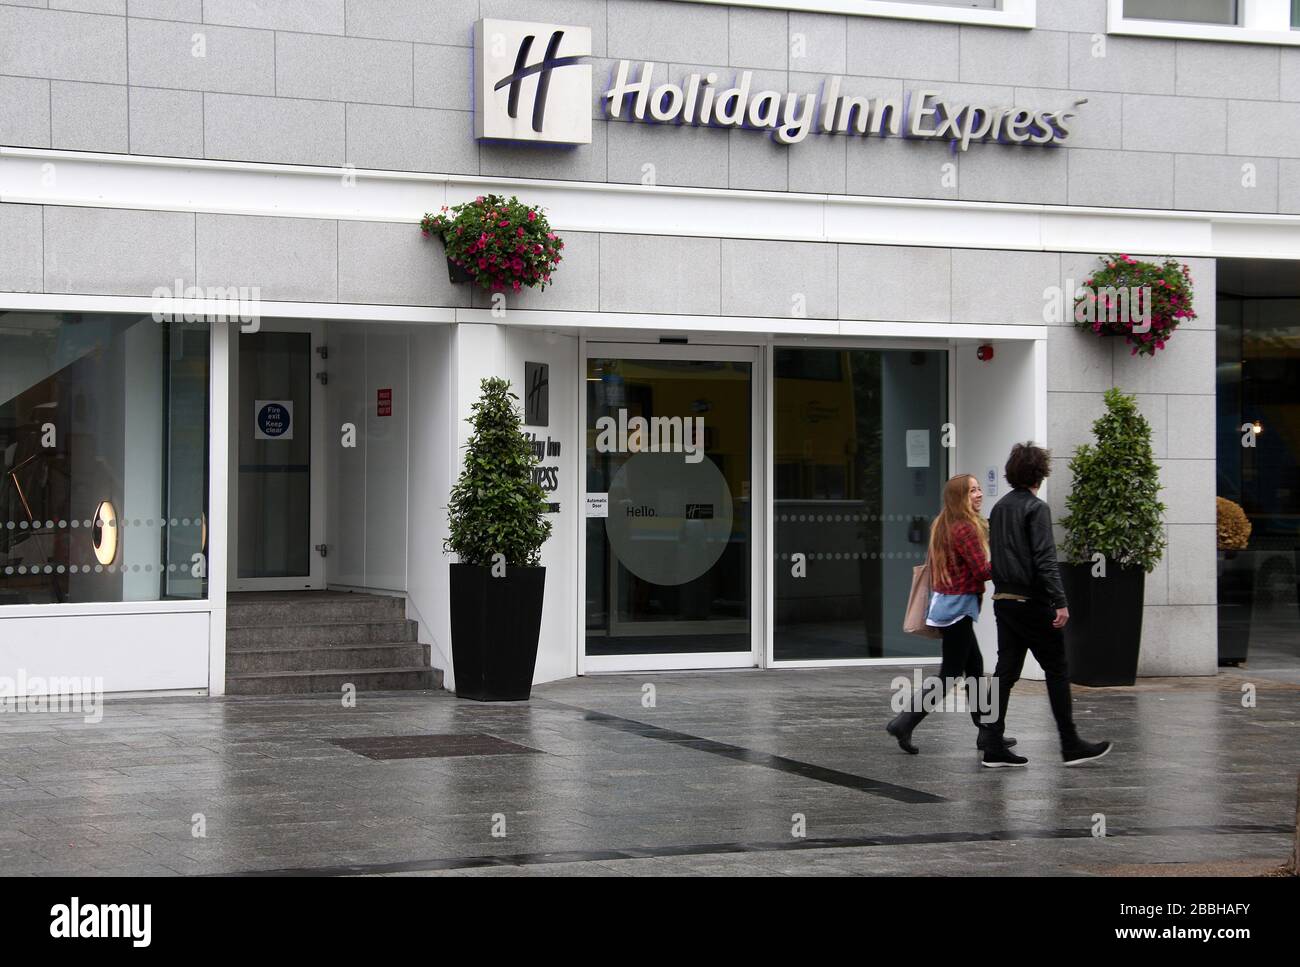 Holiday Inn Express Hotel in Dublin City Centre Stock Photo